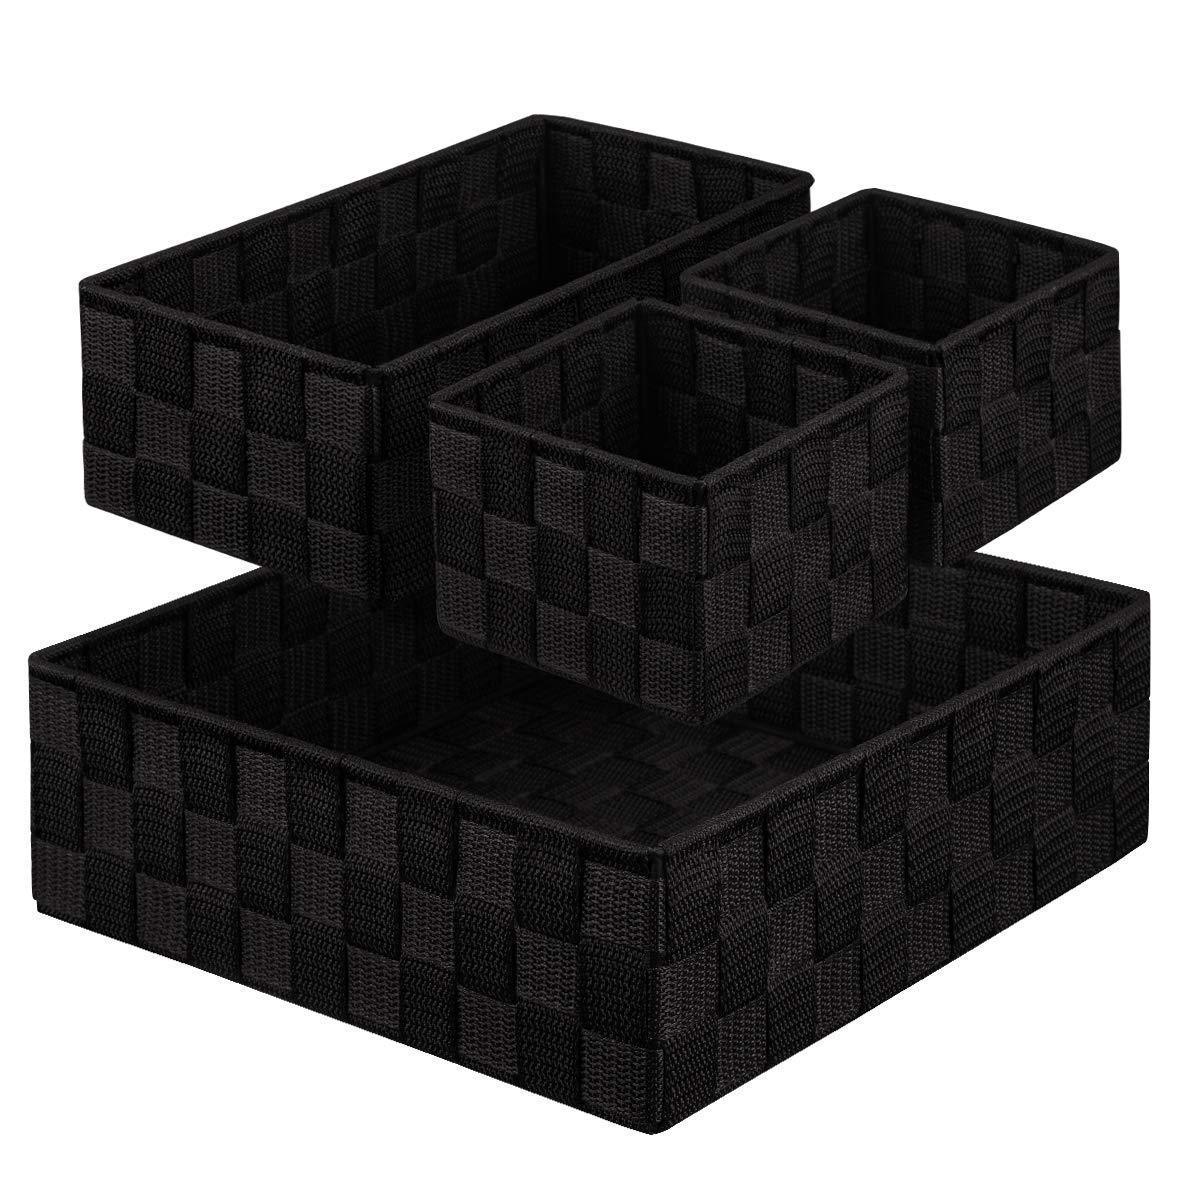 Budget friendly kedsum woven storage box cube basket bin container tote cube organizer divider for drawer closet shelf dresser set of 4 black